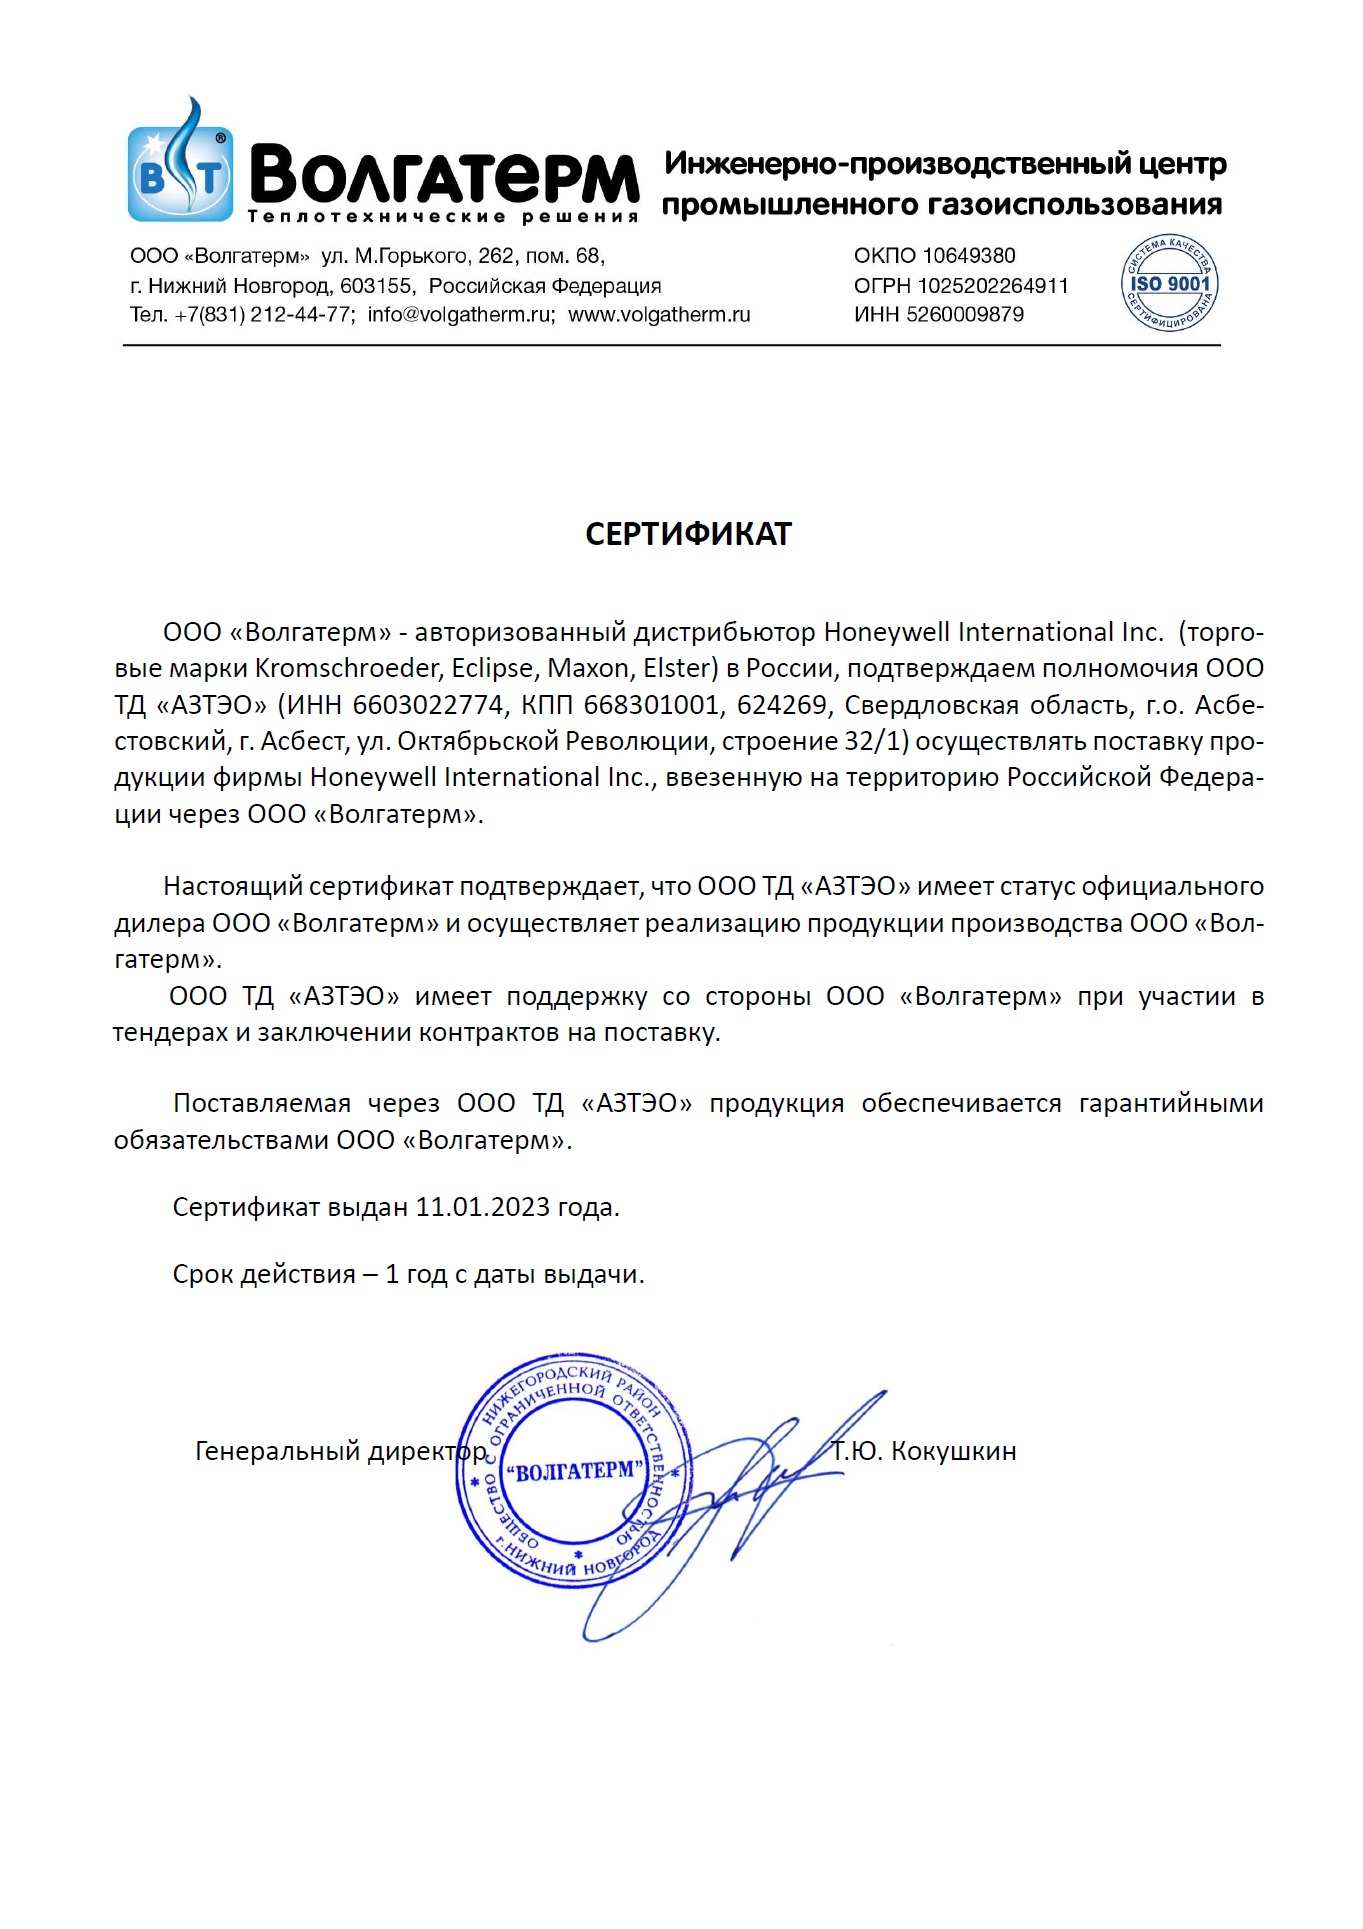 Сертификат ООО "Волгатерм"